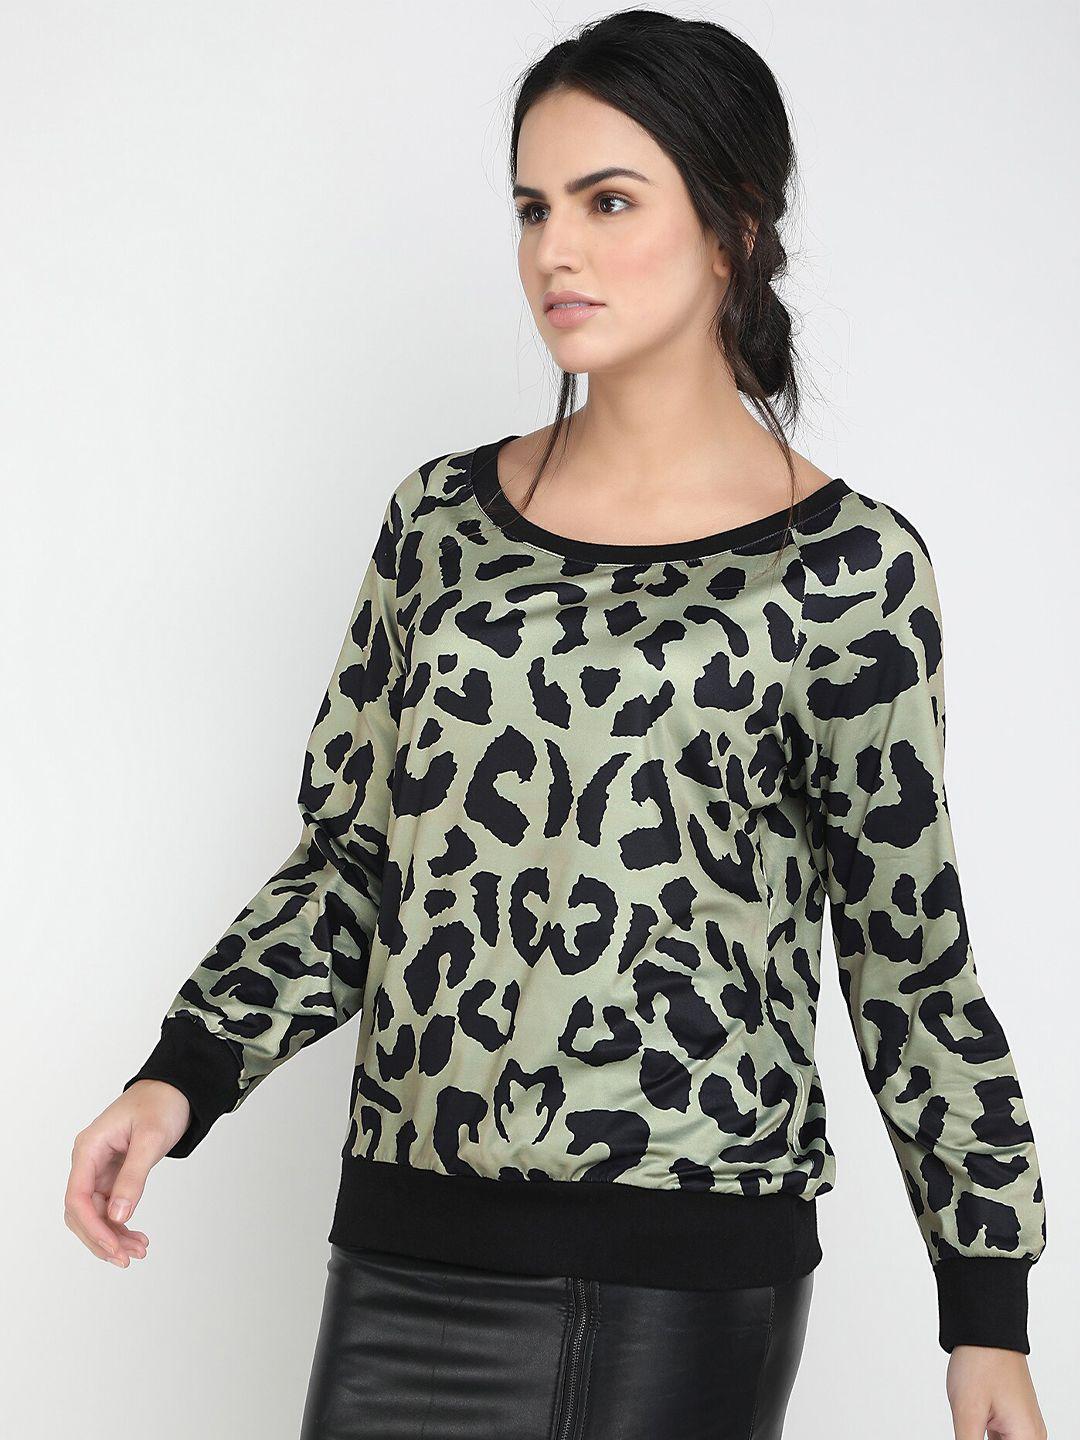 lulu & sky animal printed pullover sweater